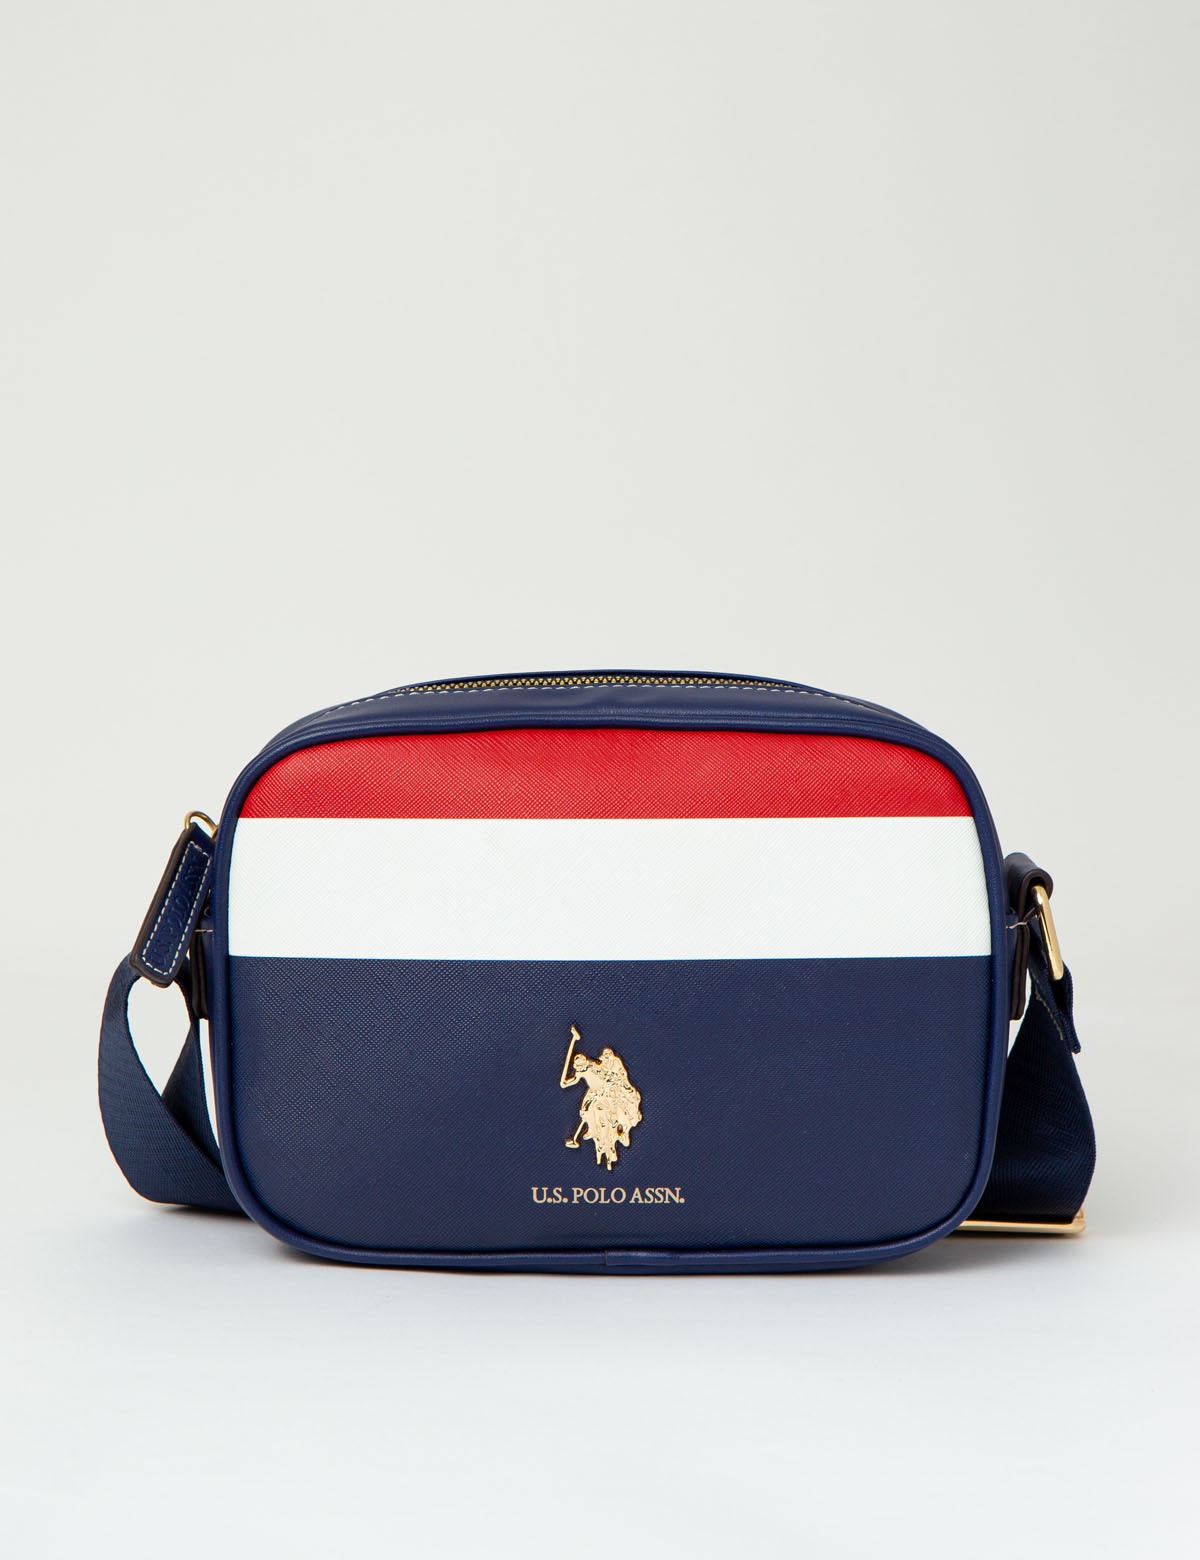 U.S Polo Assn Vintage Purse Handbag | eBay